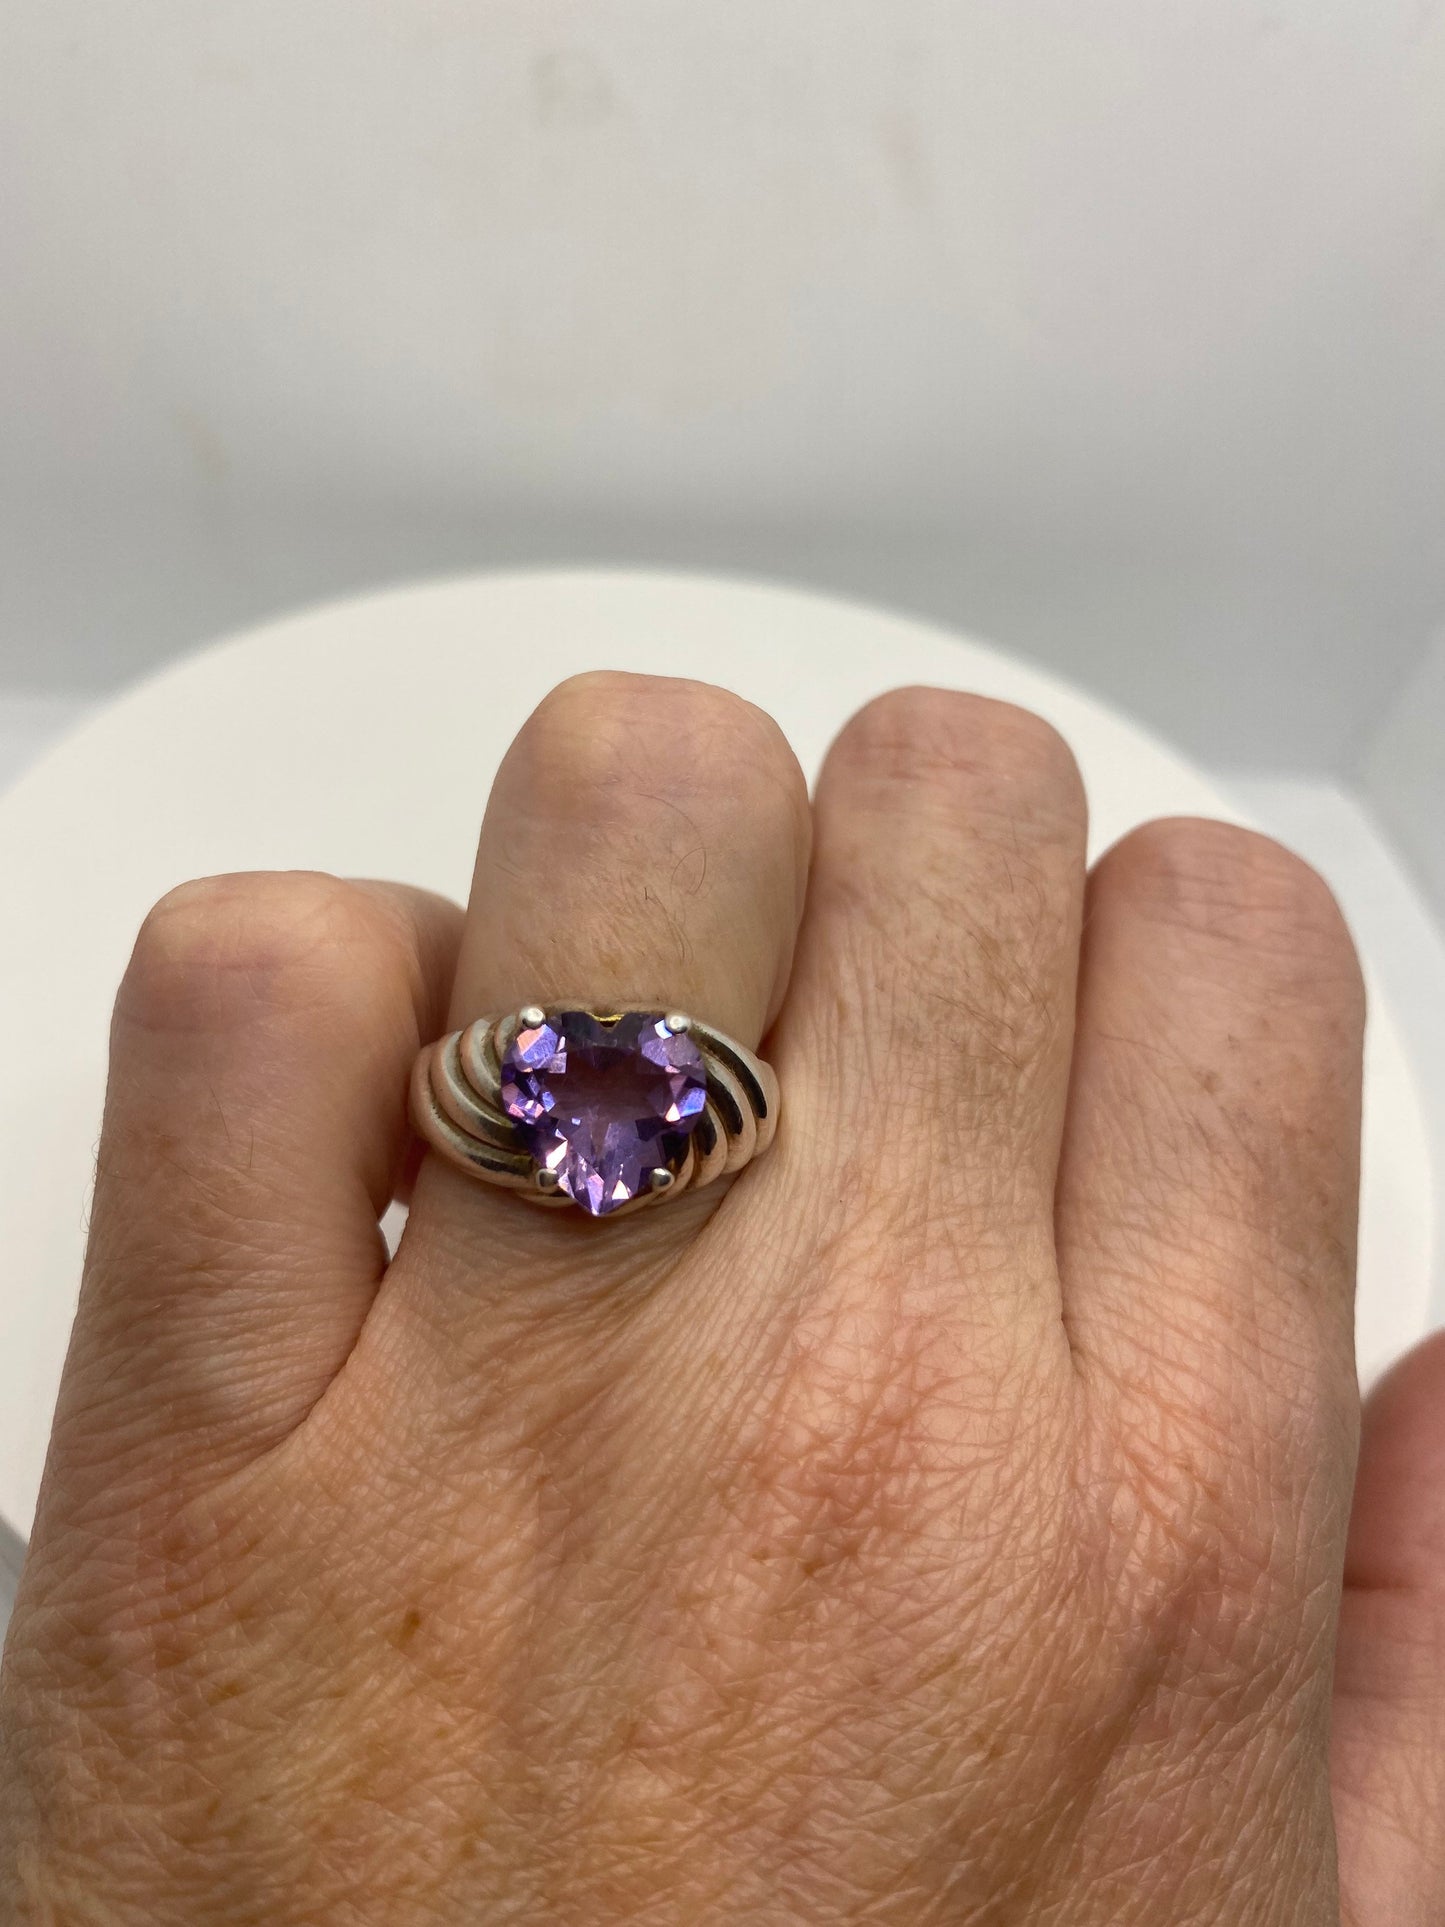 Vintage Purple Amethyst Heart 925 Sterling Silver Ring